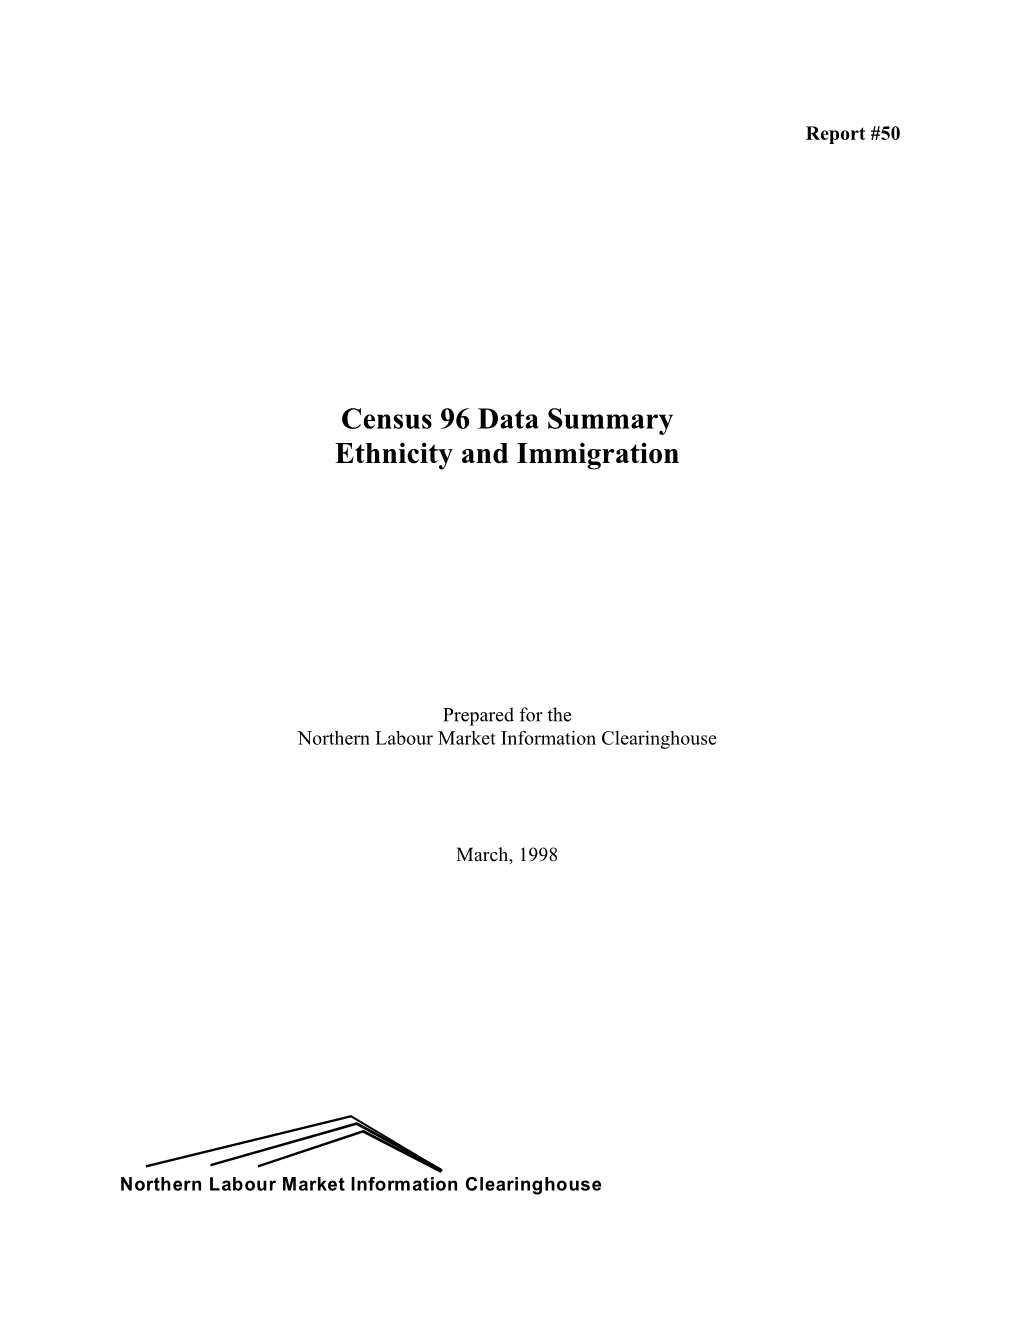 Census 96 Data Summary Ethnicity and Immigration